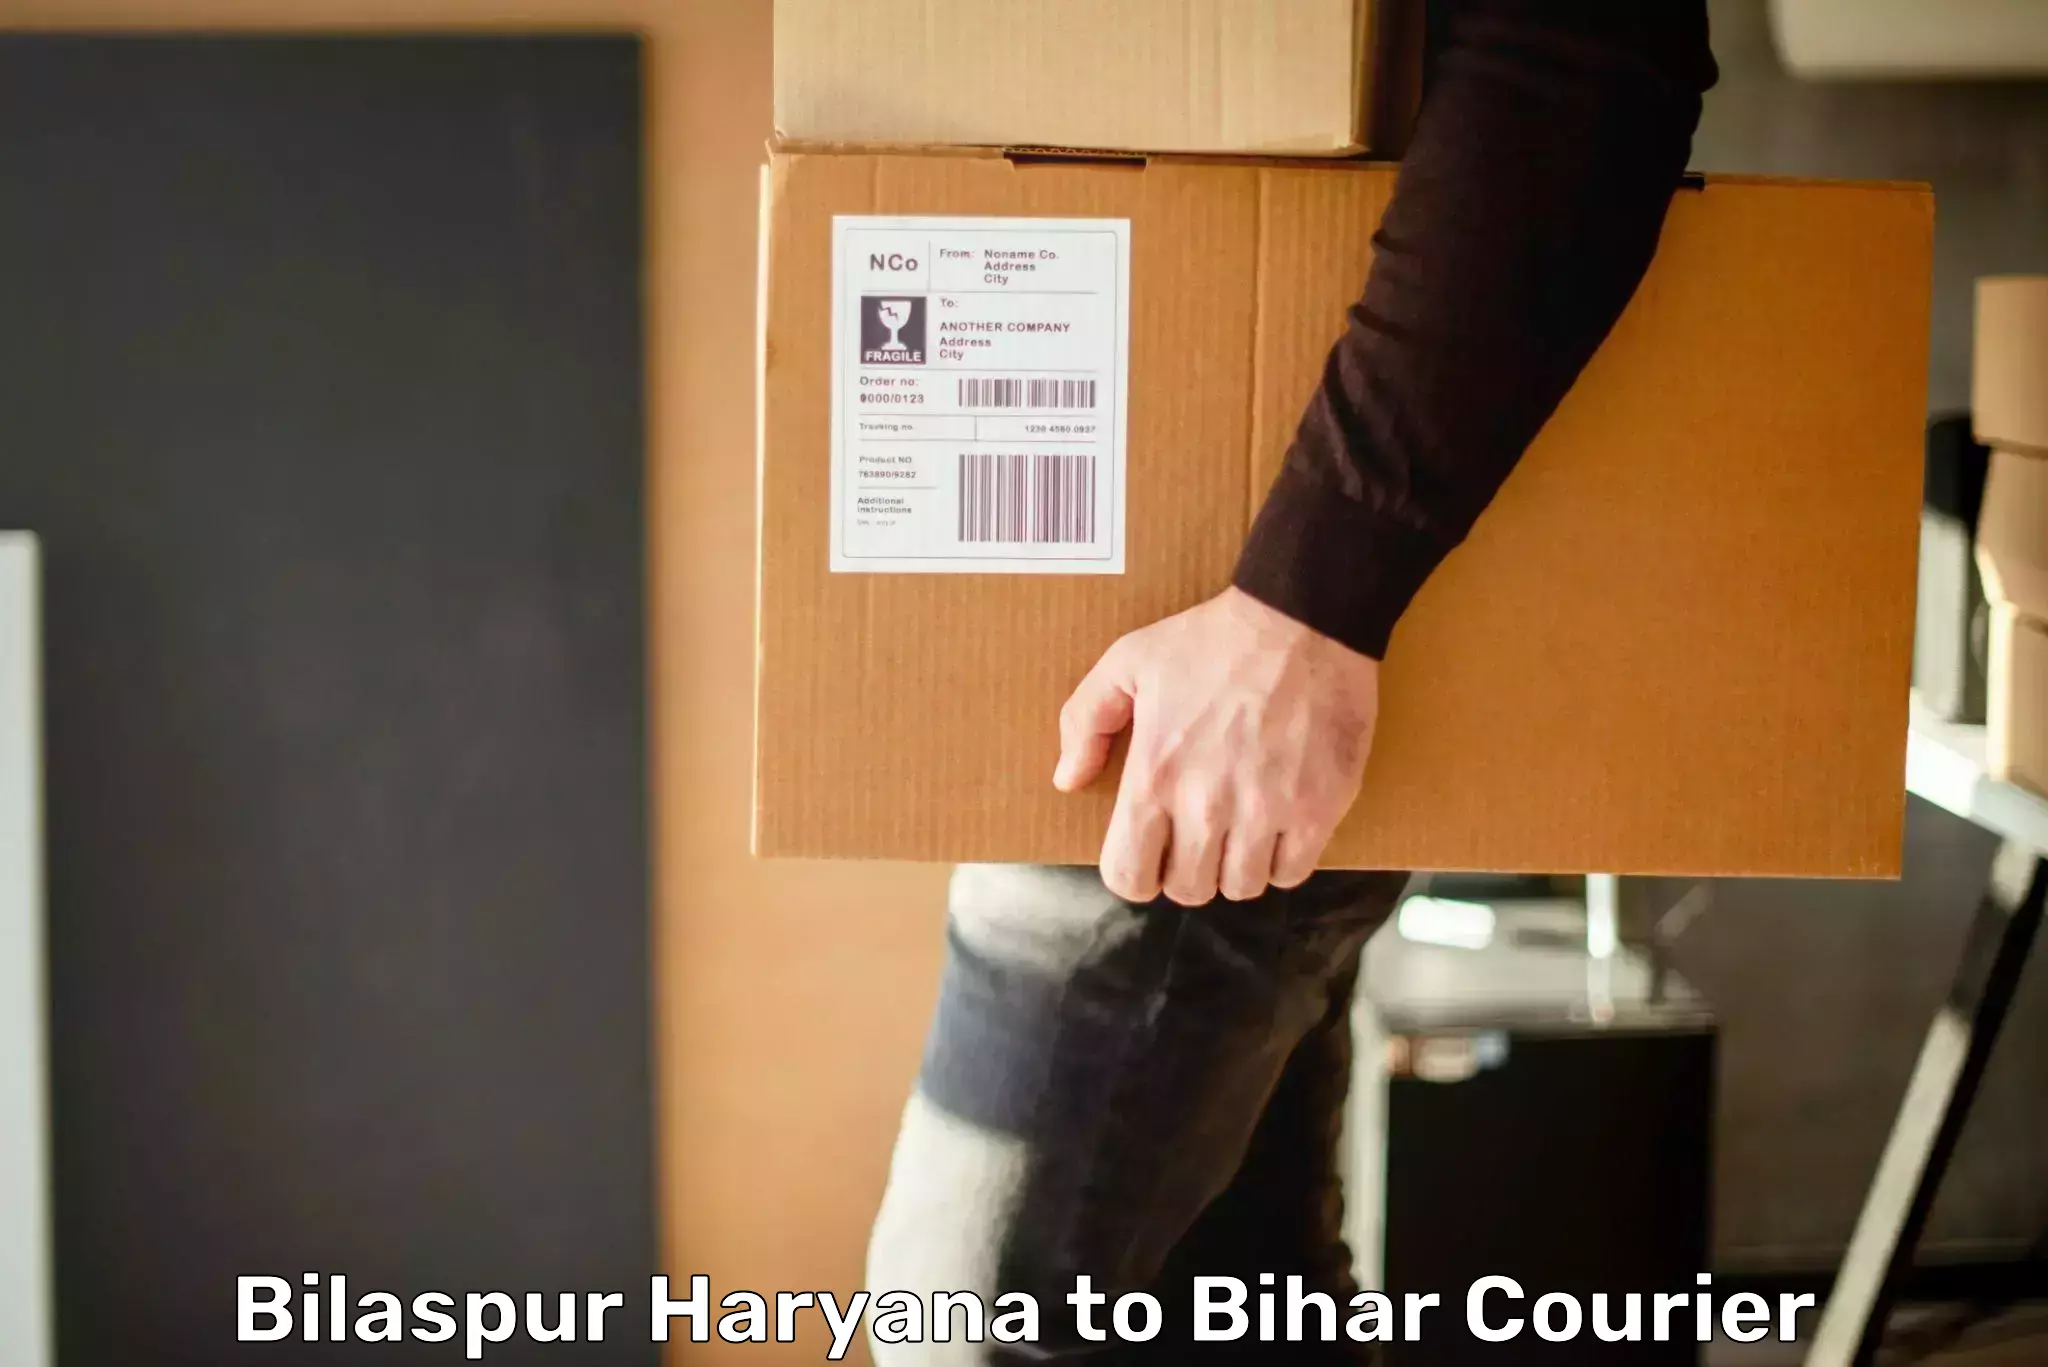 Express delivery network Bilaspur Haryana to Saharsa